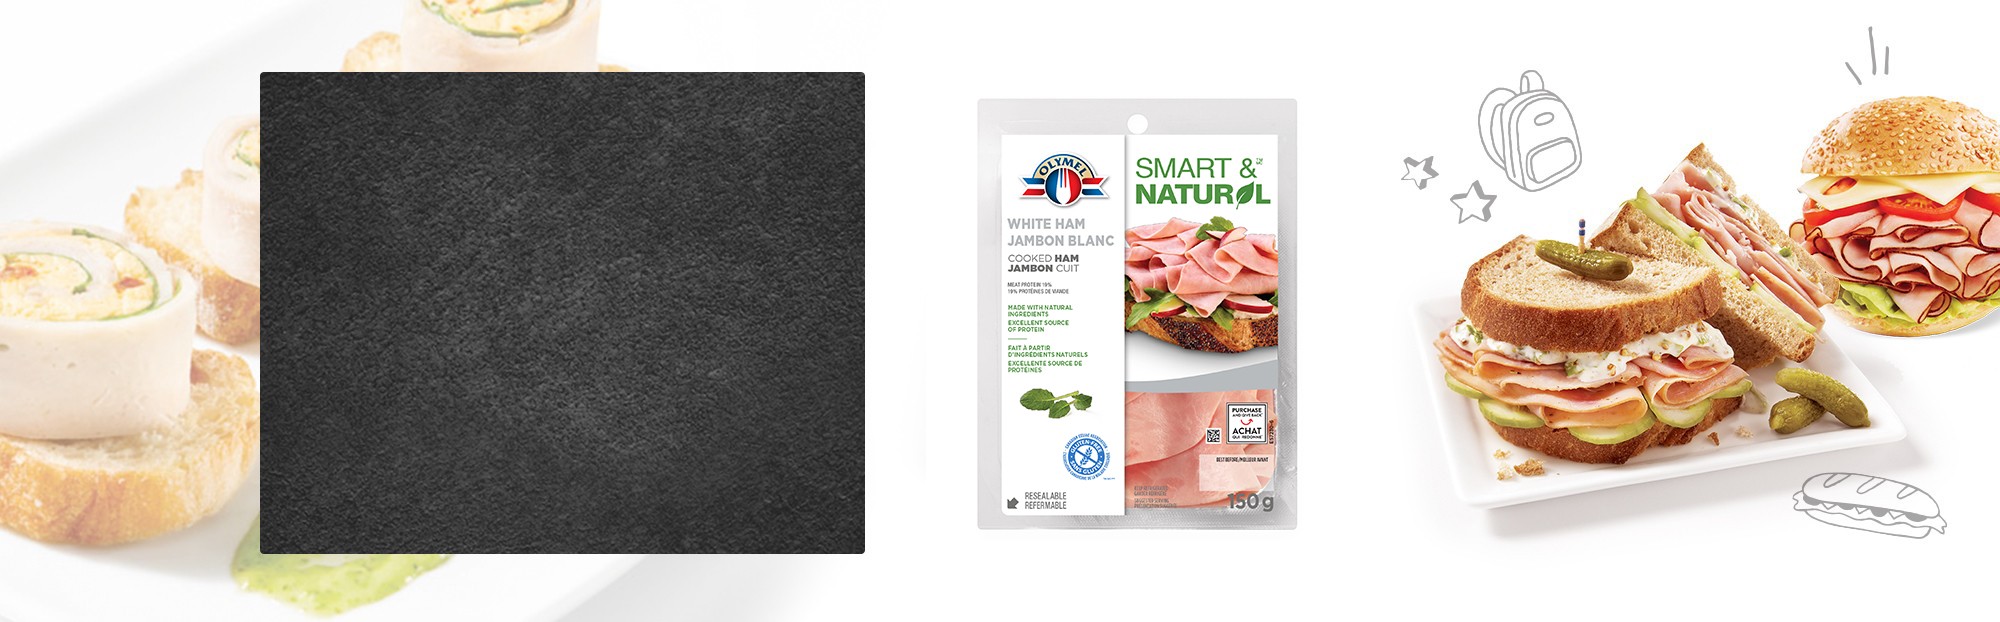 Shaved Cooked White Ham Olymel Smart & Natural